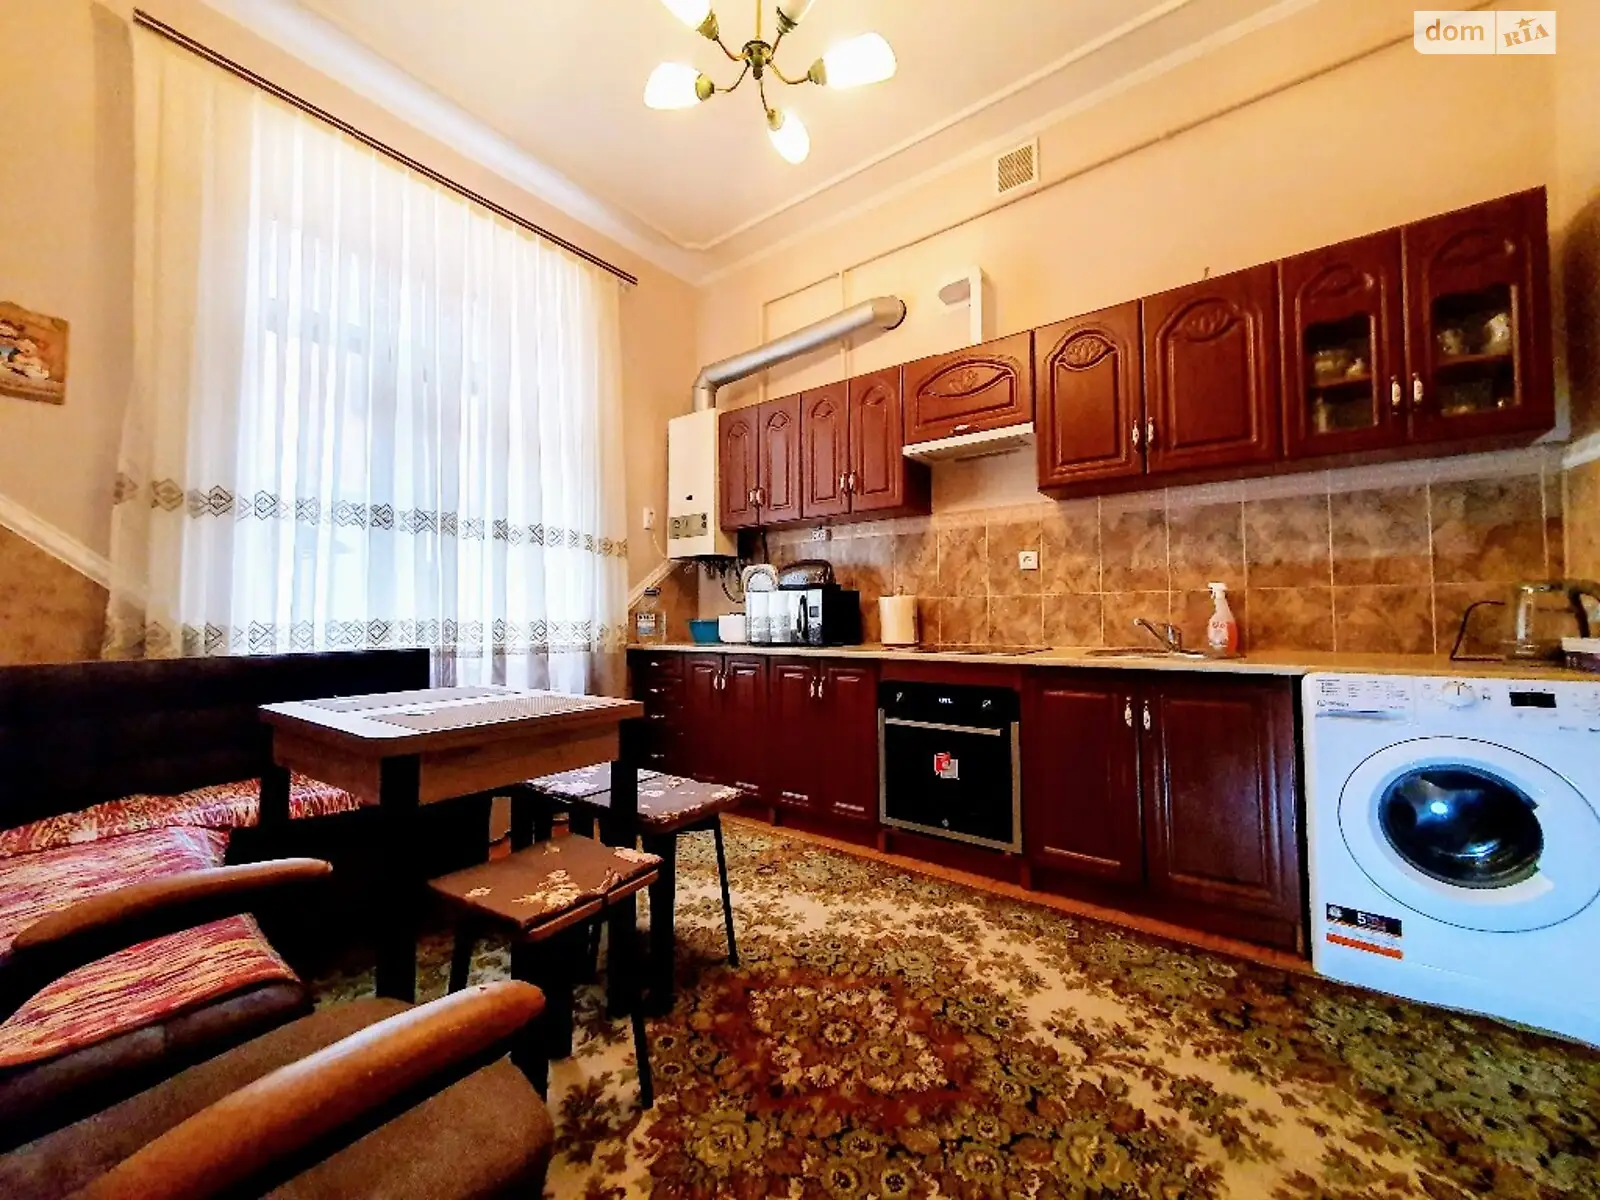 Сдается в аренду 2-комнатная квартира 75 кв. м в Черновцах, ул. Дарвина Чарльза - фото 1